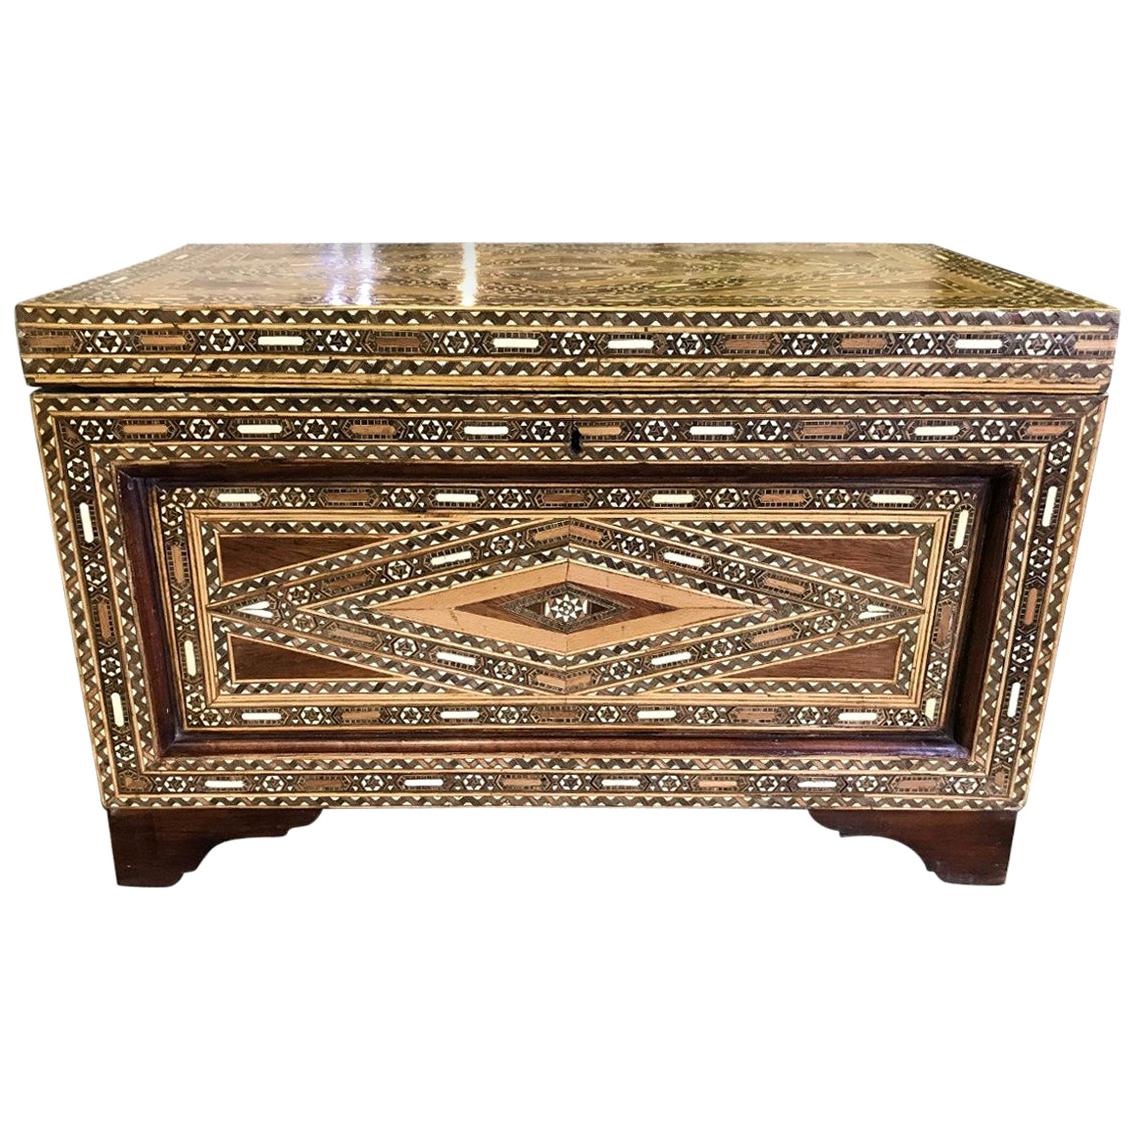 Syrian Moorish Mother of Pearl Inlaid Mosaic Trunk Large Wood Box